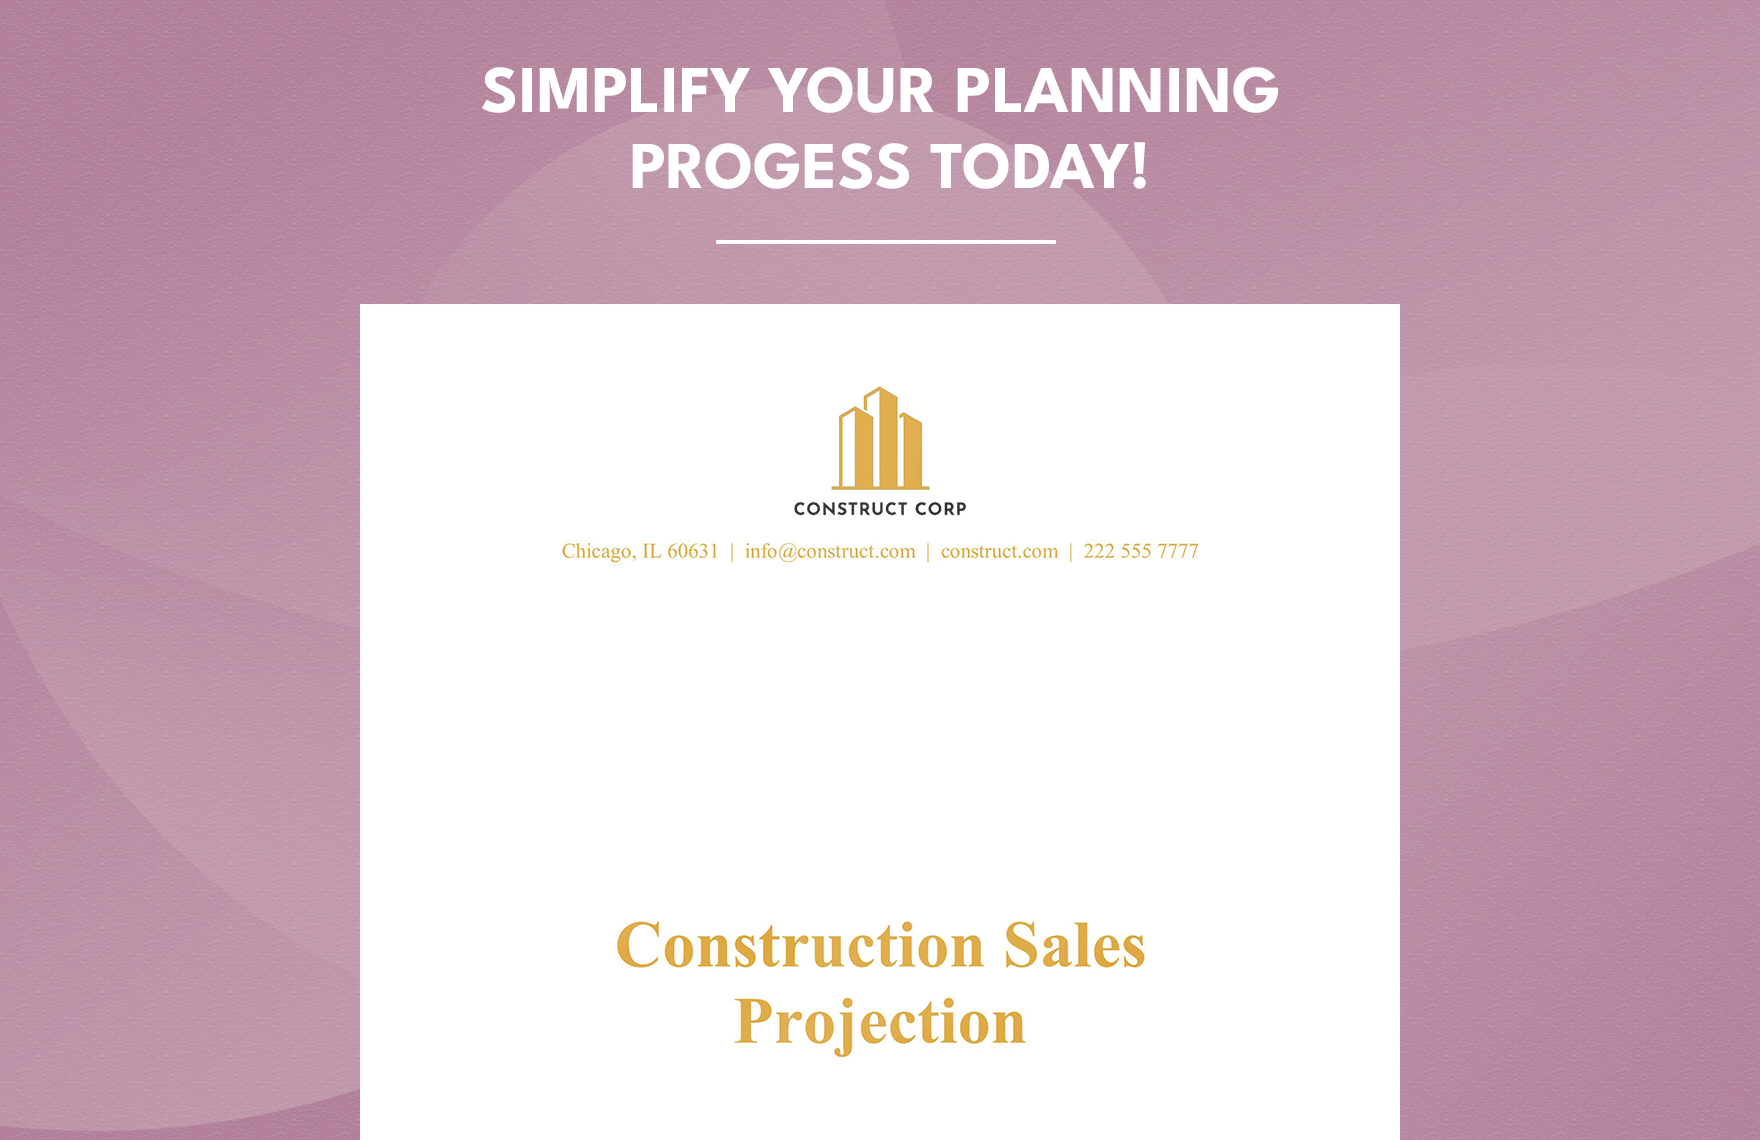 Construction Sales Projection